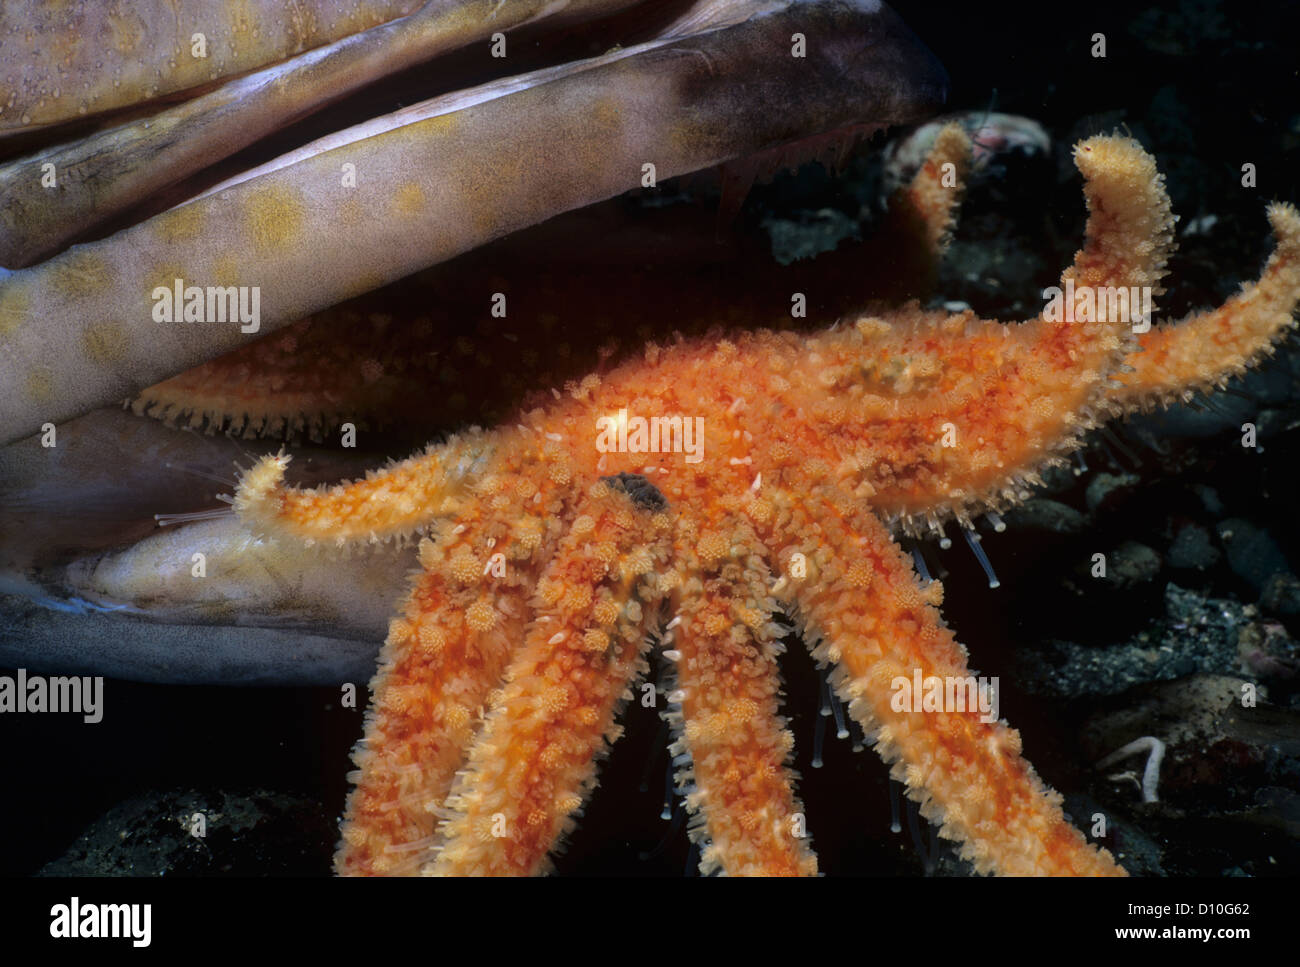 Sunflower Sea Star (Pycnopodia helianthoides) scavenging Lingcod (Ophiodon elongatus). Canada Stock Photo